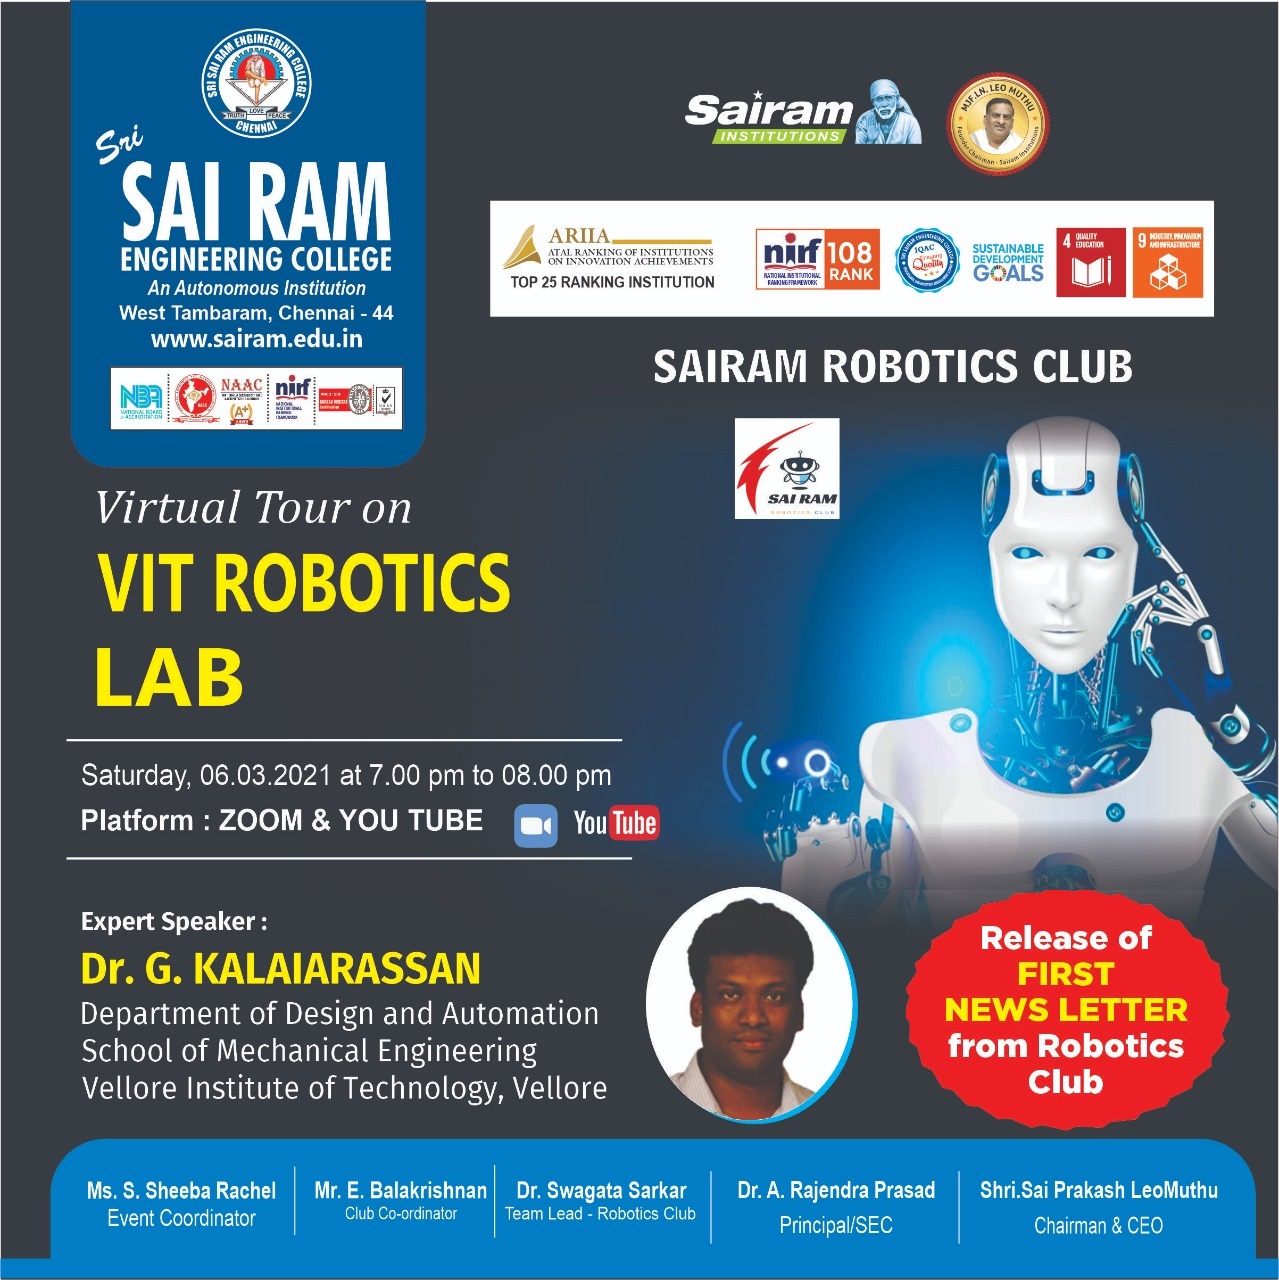 Sairam Robotics Club Invites you for a Virtual Tour on  ” VIT ROBOTICS CLUB” on 6th March 2021 (Saturday).